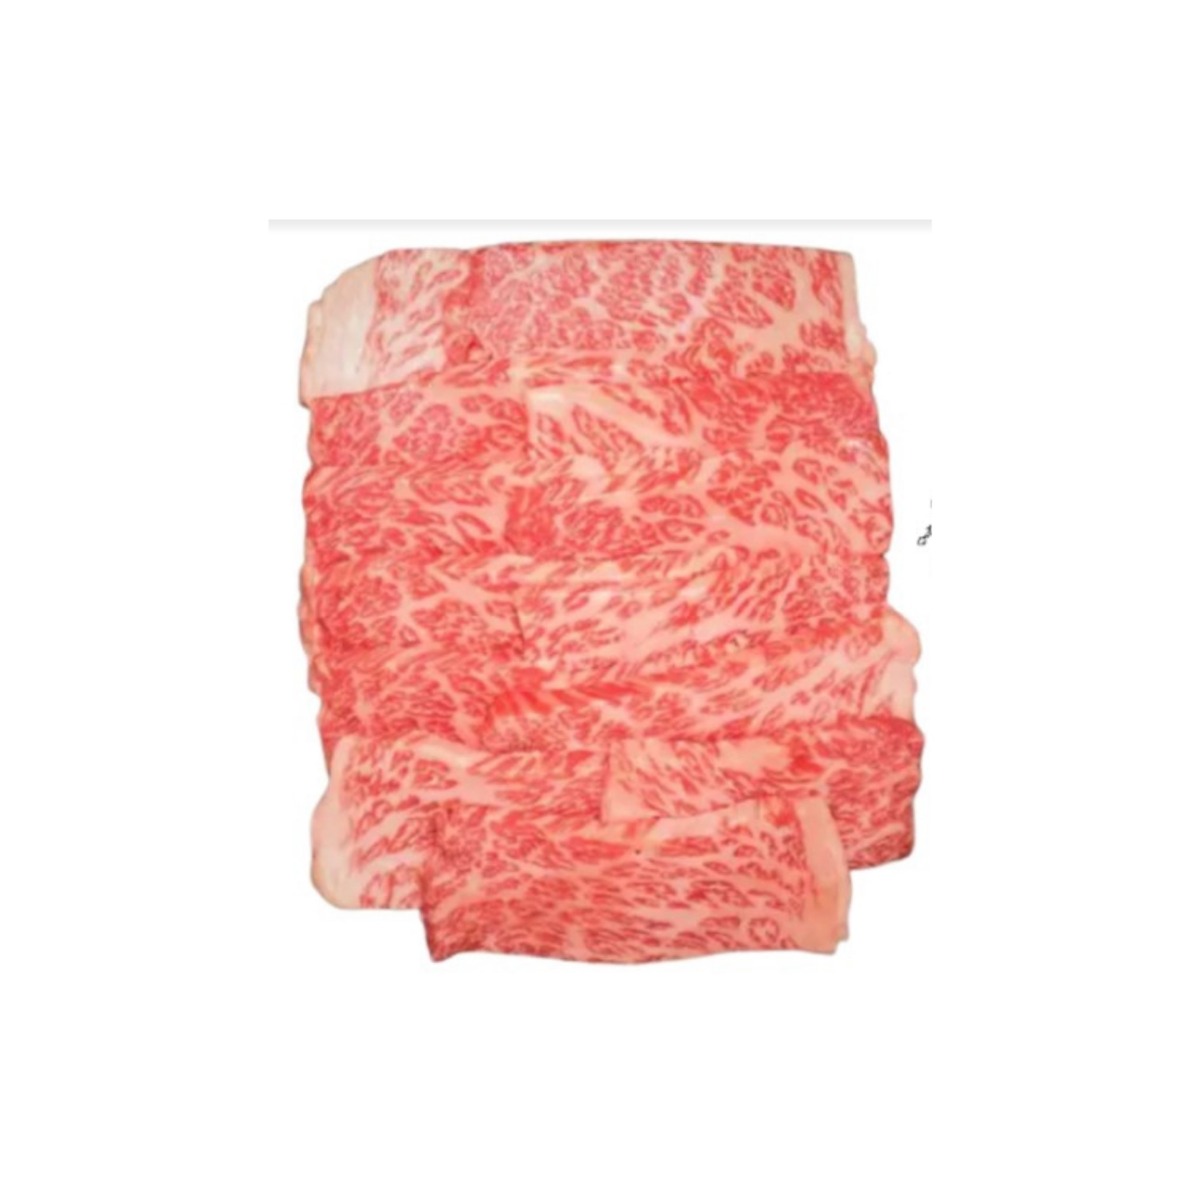 LamboPlace - Halal F1 Japanese Wagyu Beef For BBQ Yakiniku 100g